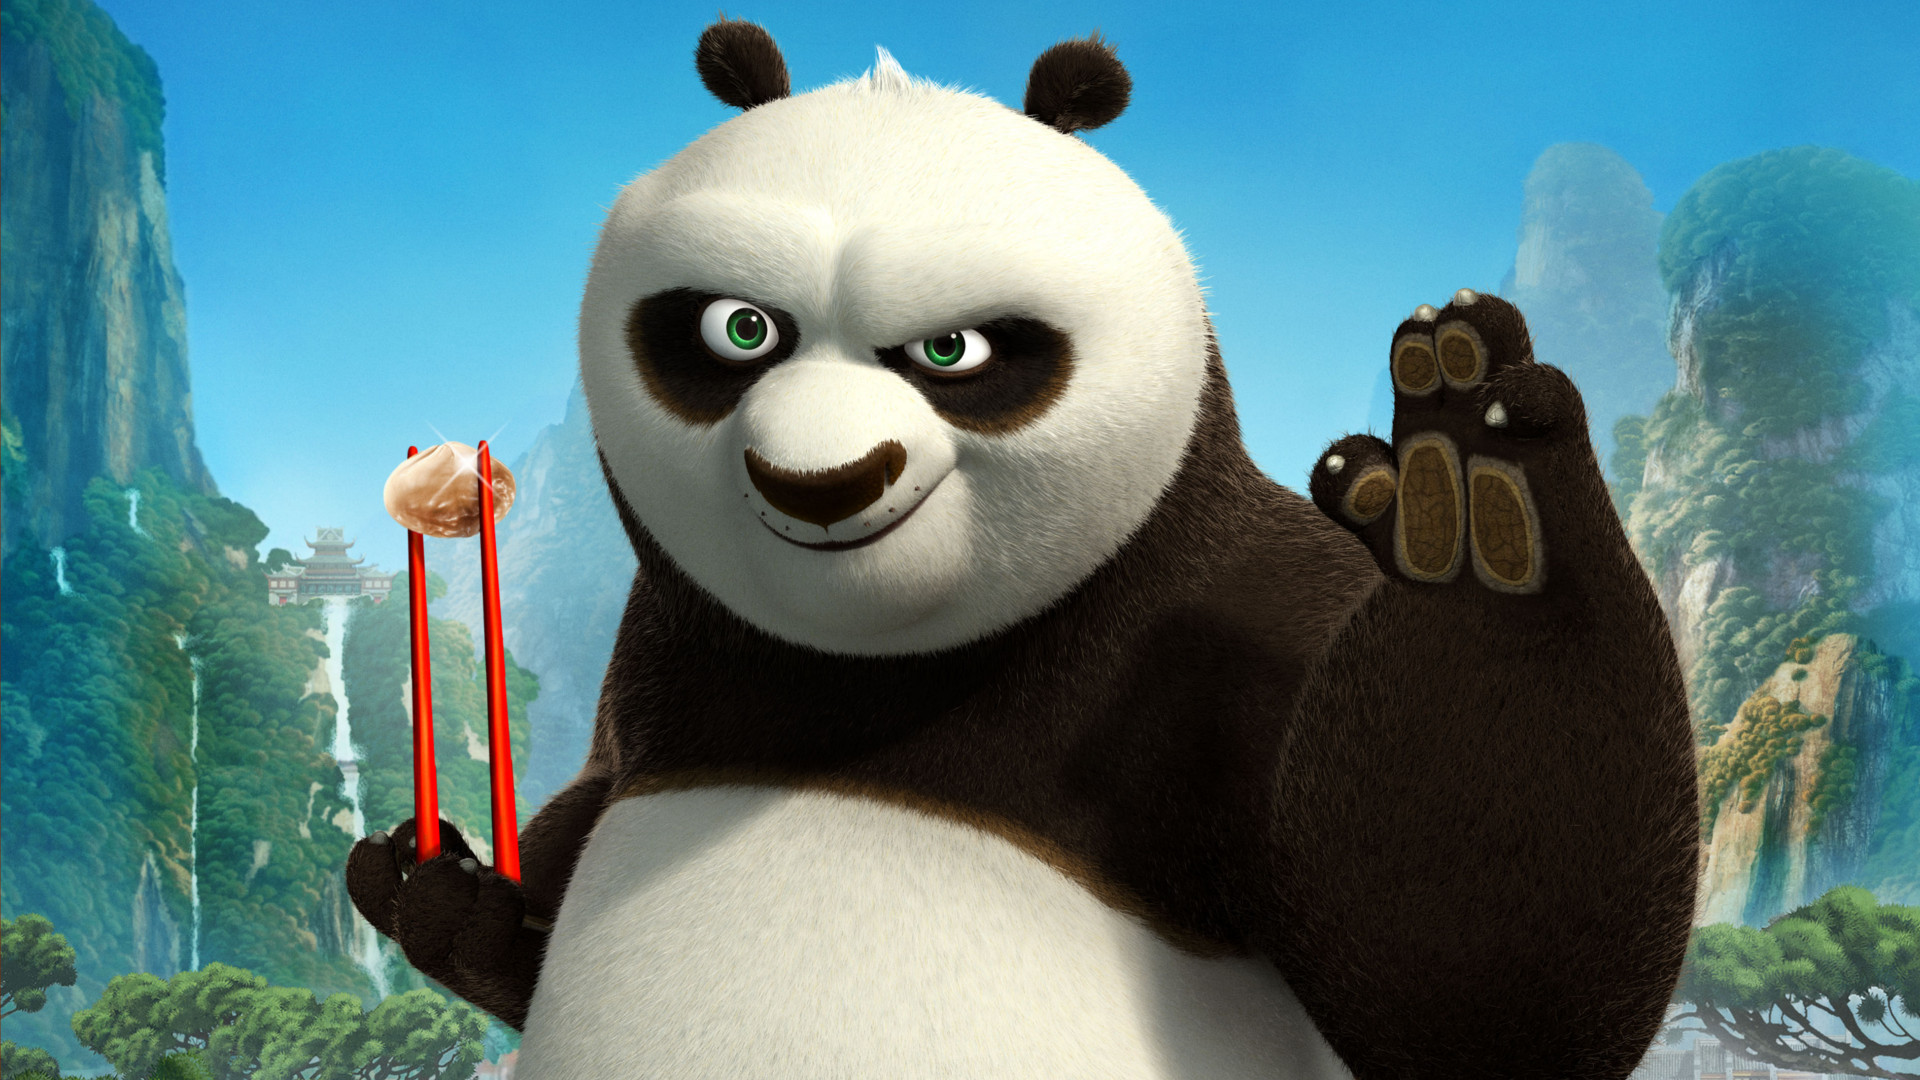 407222 descargar imagen películas, kung fu panda 2, po (kung fu panda), kung fu panda: fondos de pantalla y protectores de pantalla gratis